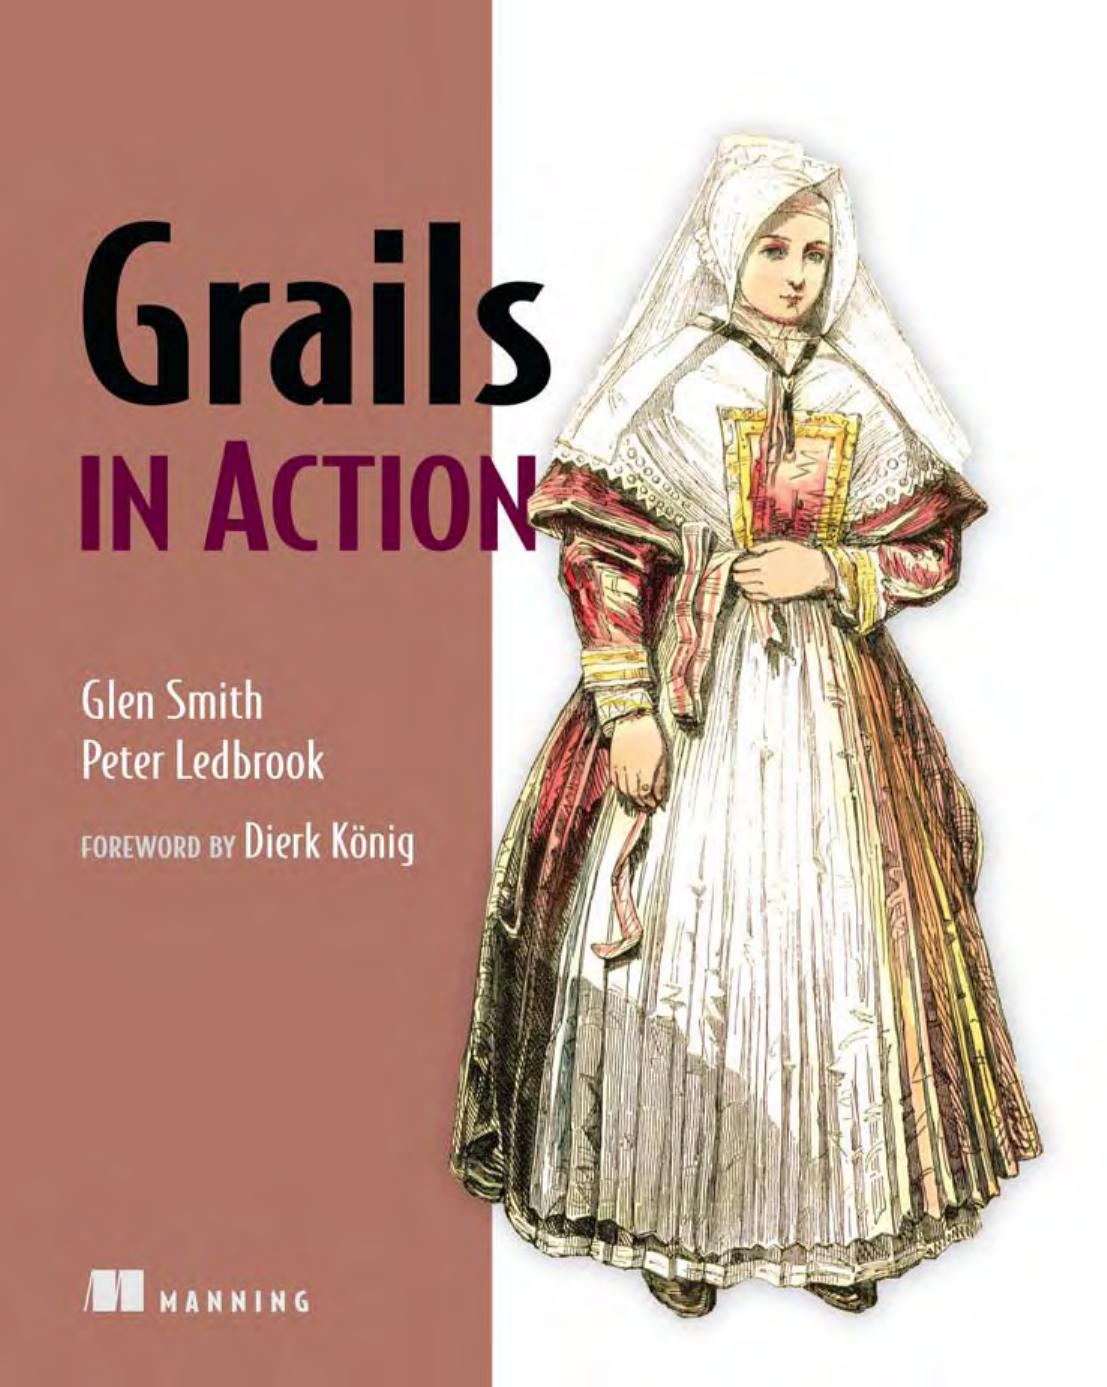 Grails in Action by Glen Smith Peter Ledbrook